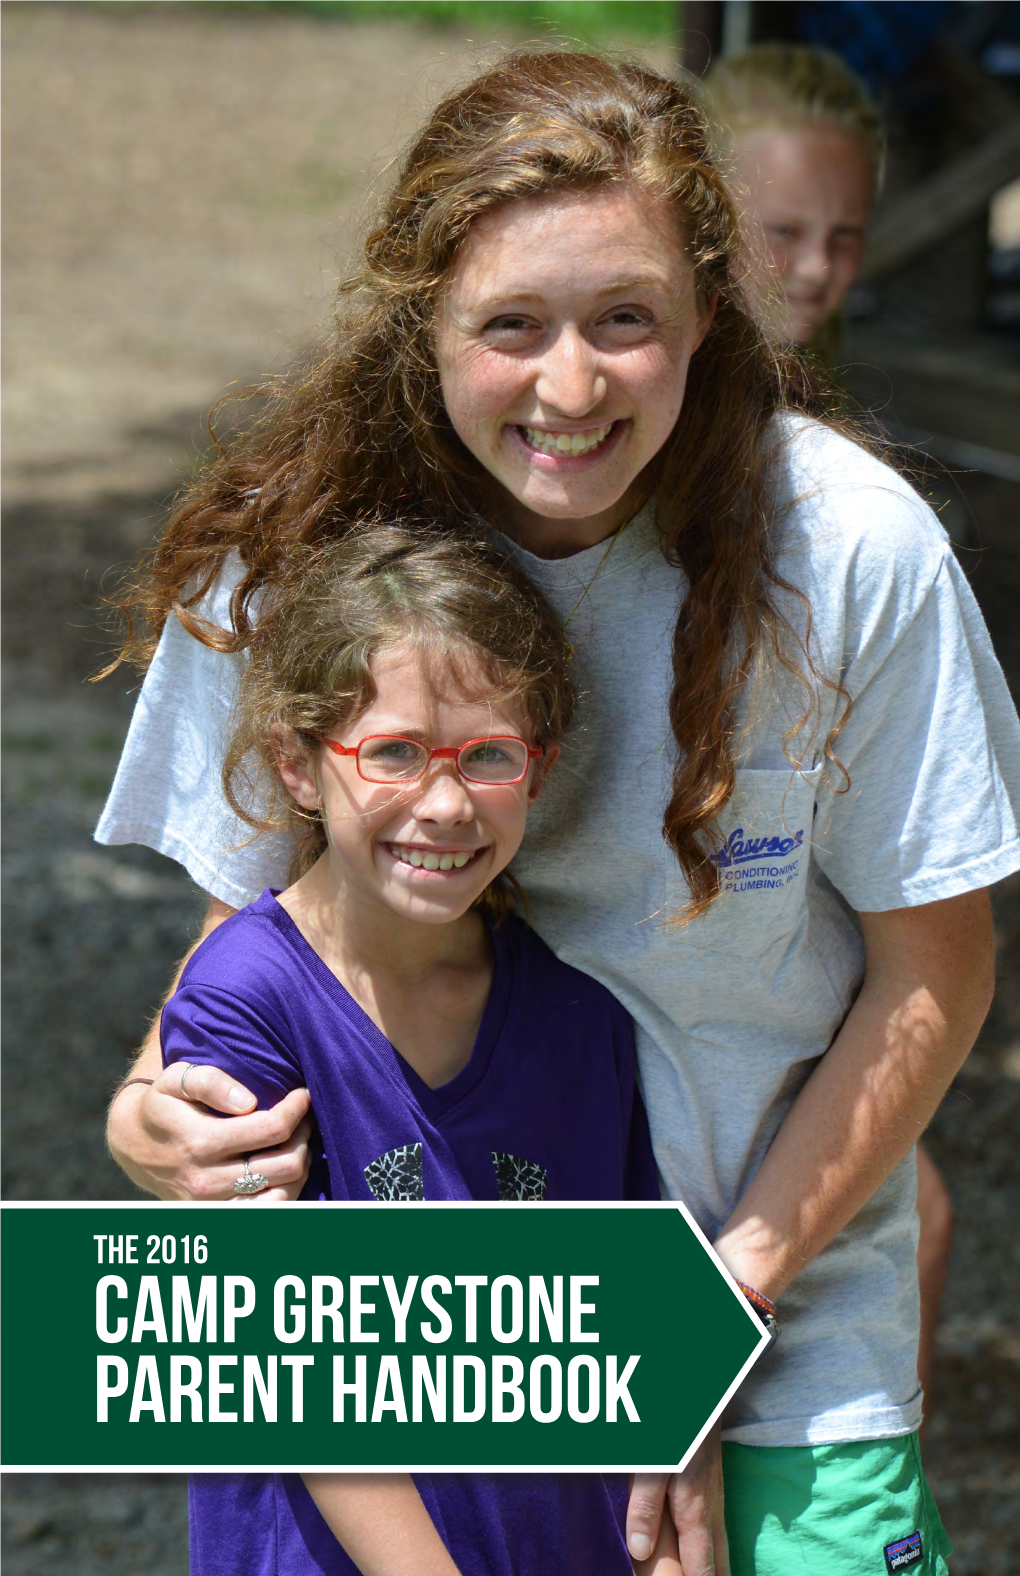 Camp Greystone Parent Handbook Camp Greystone 2016 Session Dates: Junior: Sat